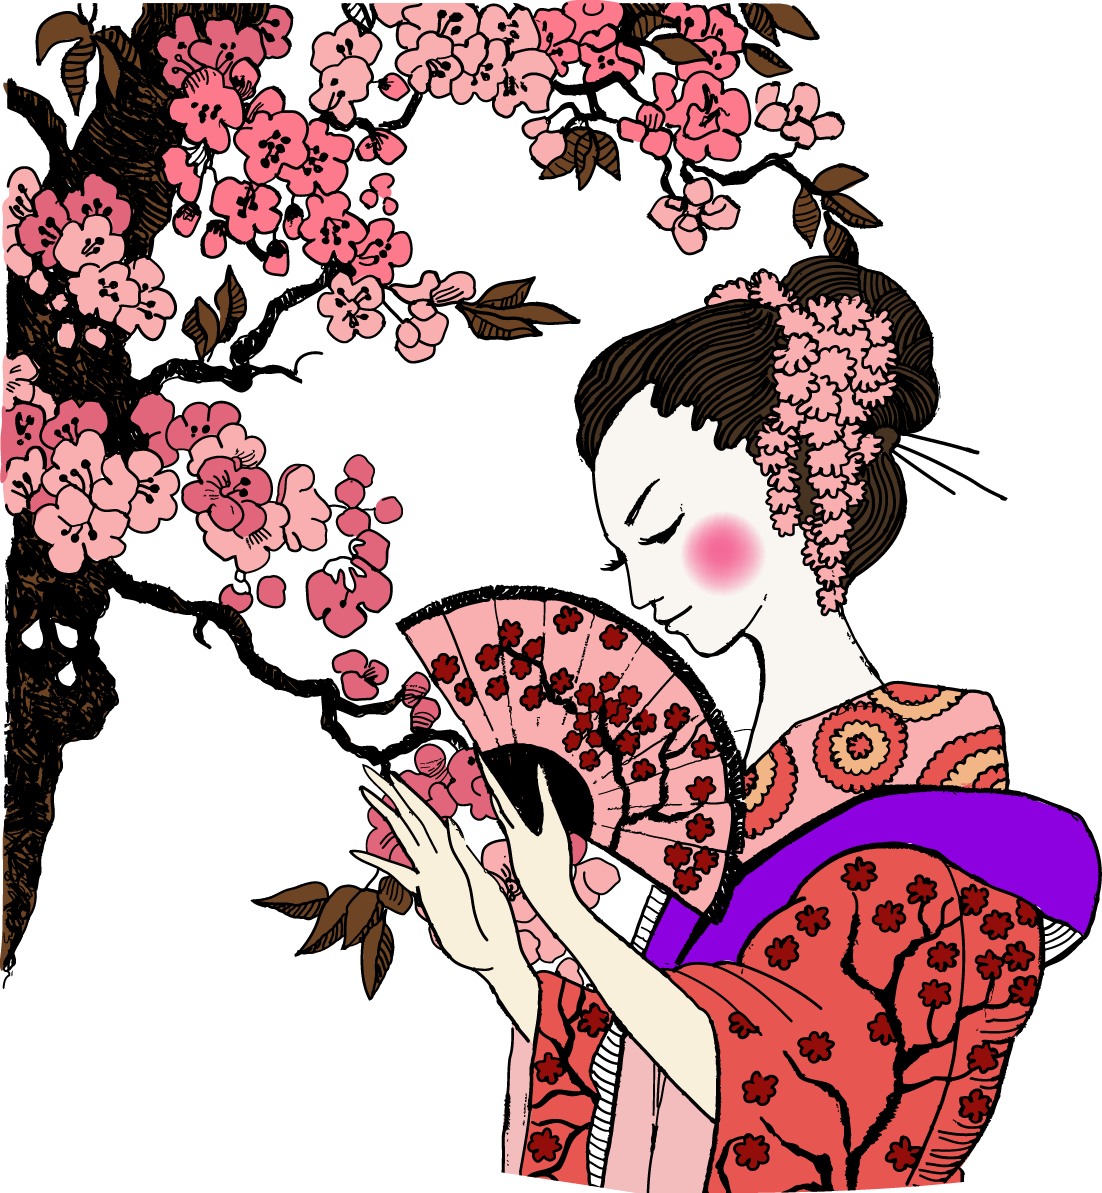 A Woman In A Kimono Holding A Fan